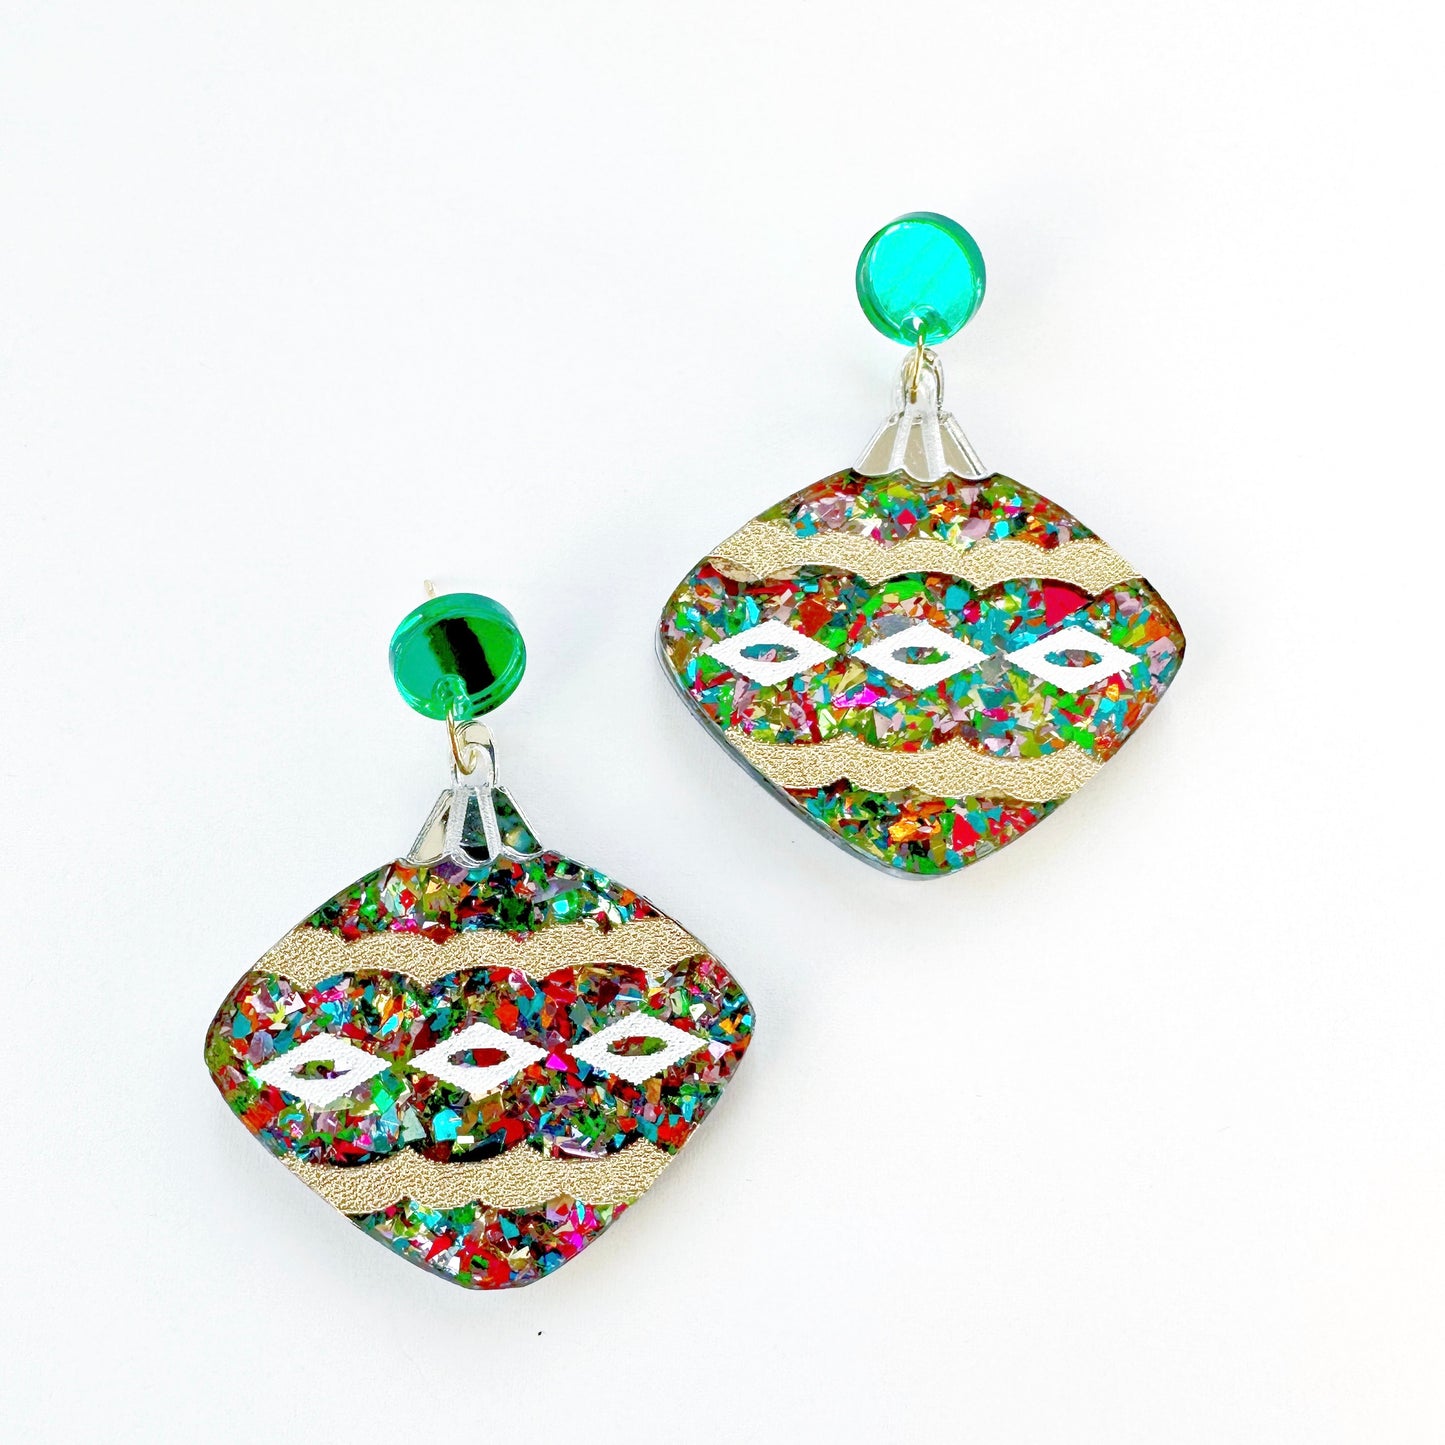 Vintage Ornament Earrings - Confetti